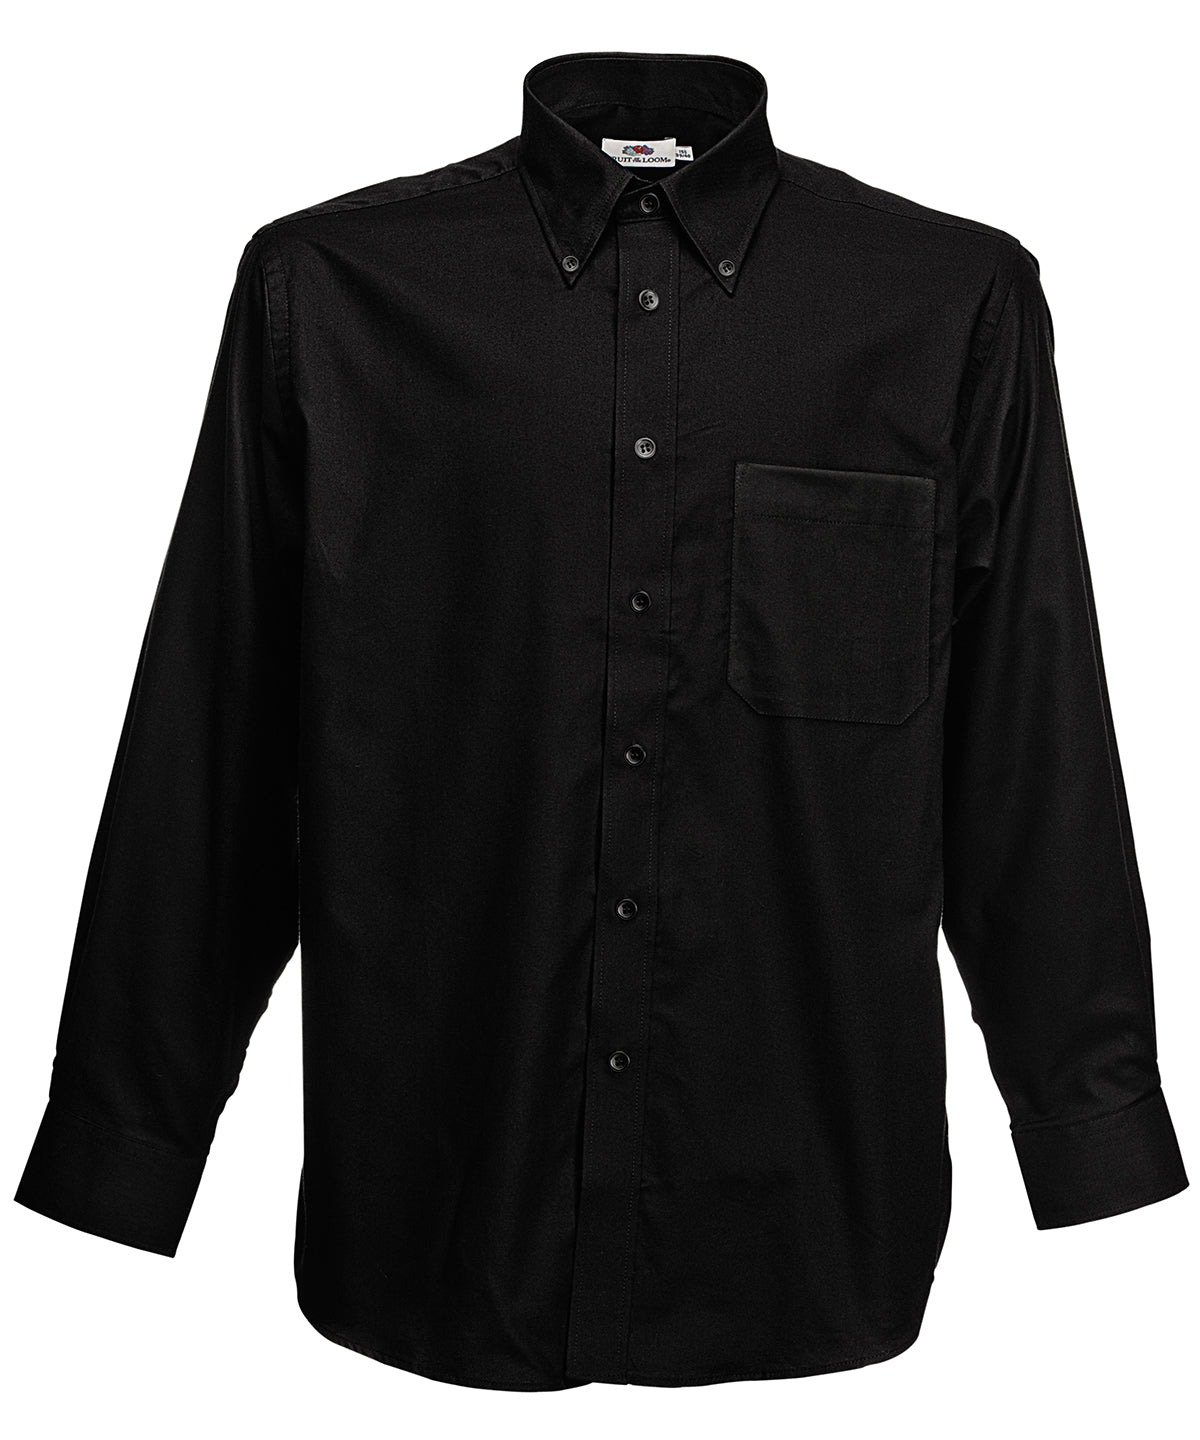 Bolir - Oxford Long Sleeve Shirt